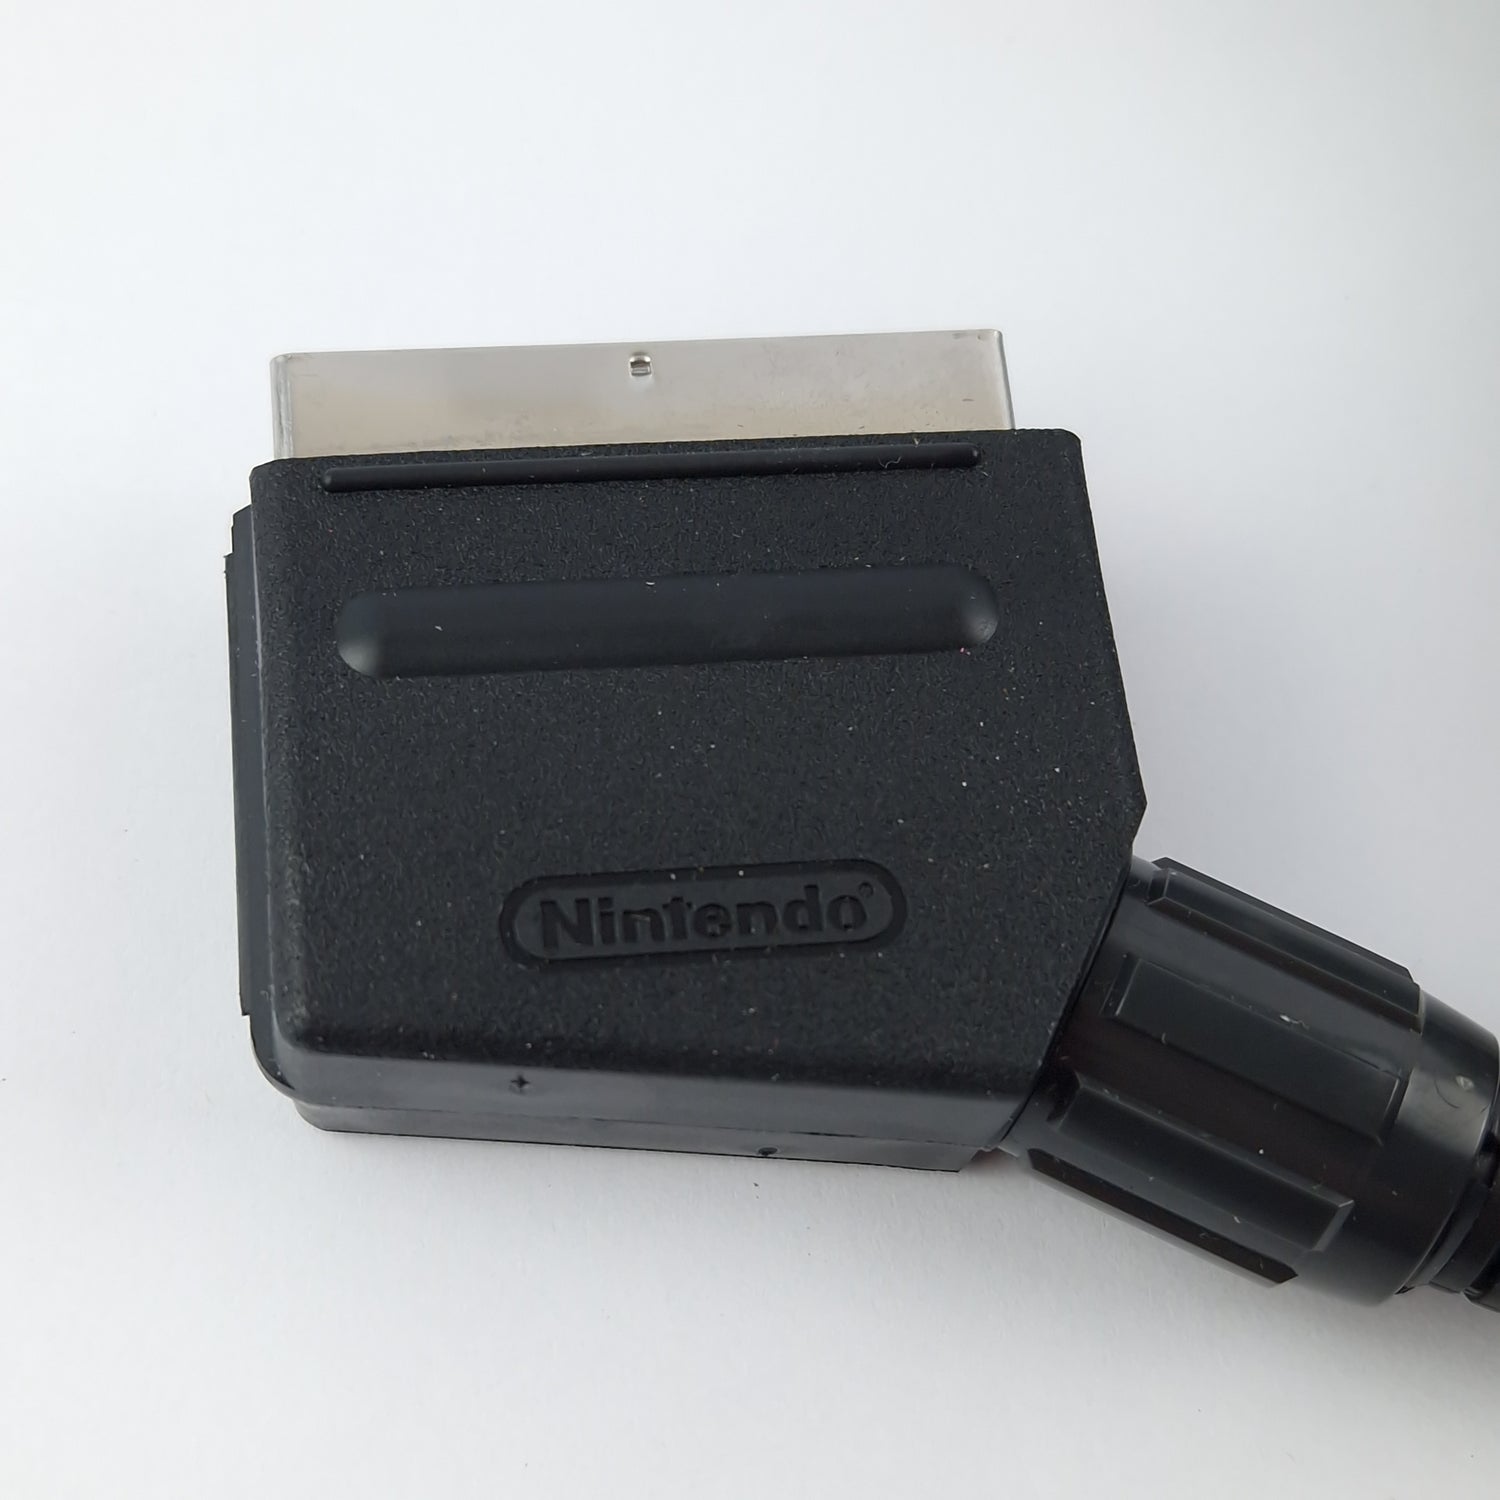 Nintendo Gamecube Zubehör : Original RGB Cable RVB / RGB KABEL - OVP GC PAL